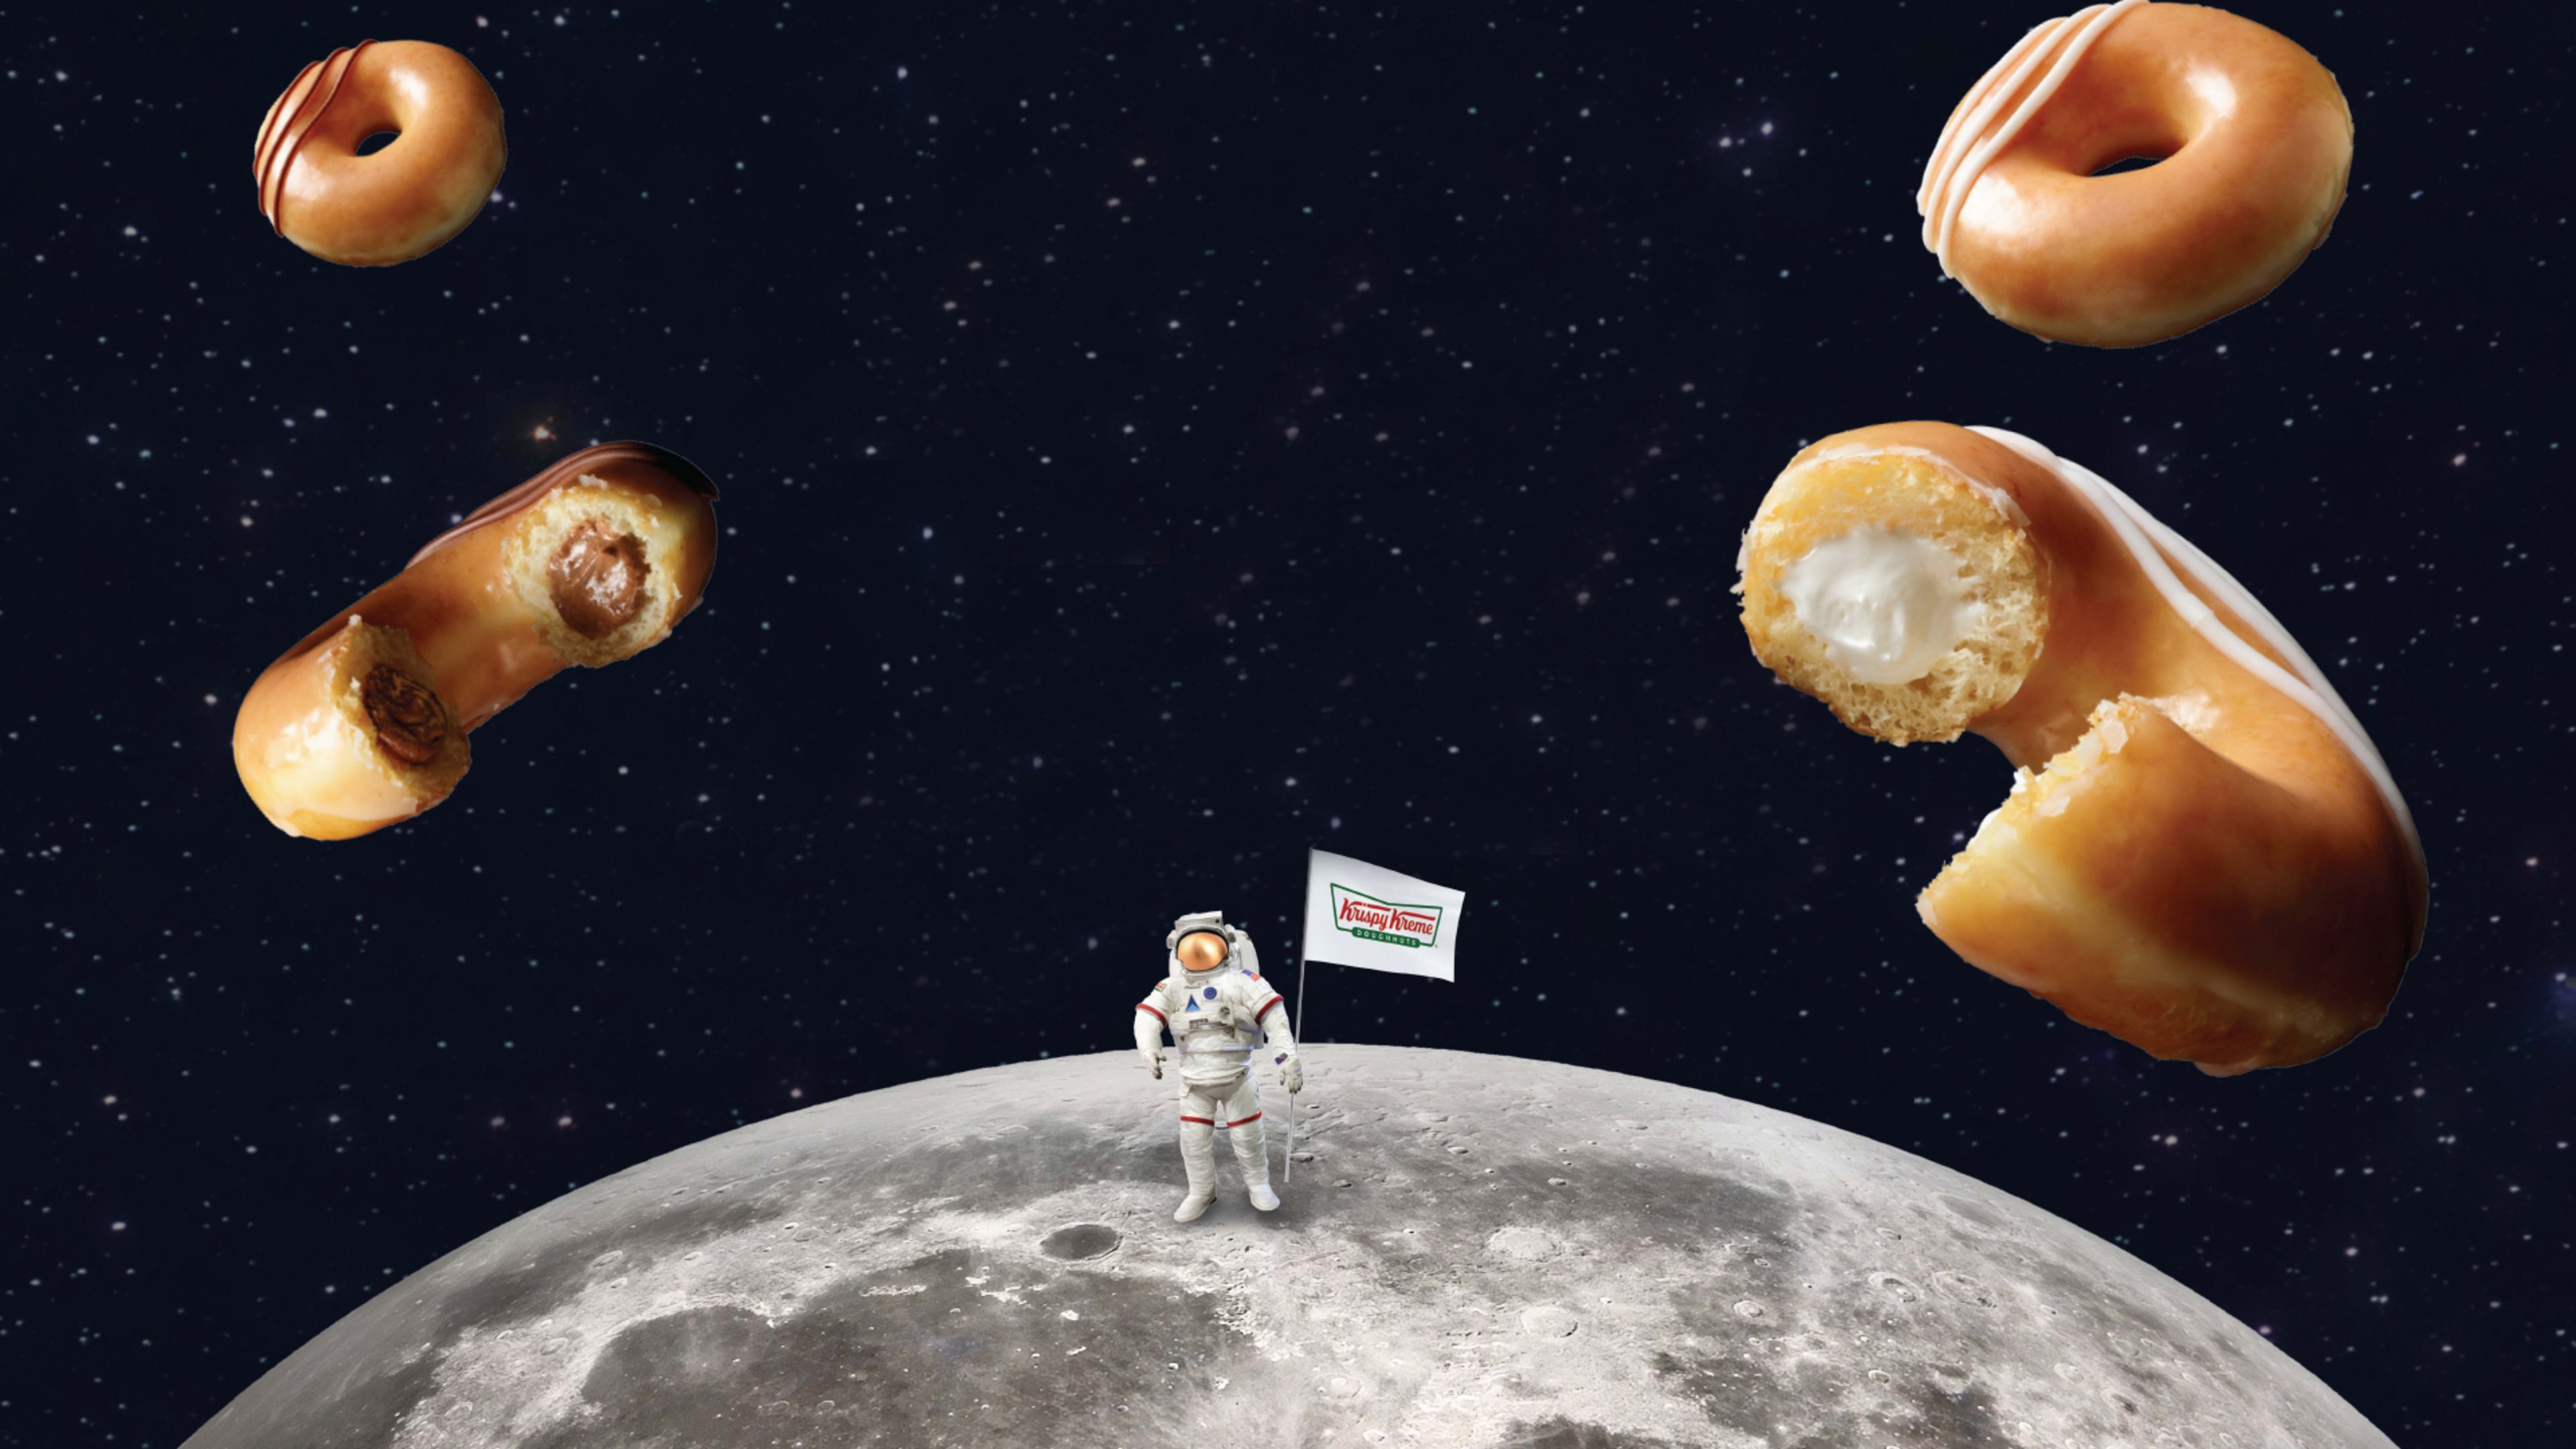 Here’s how to get your free Krispy Kreme Moon-landing tribute donut